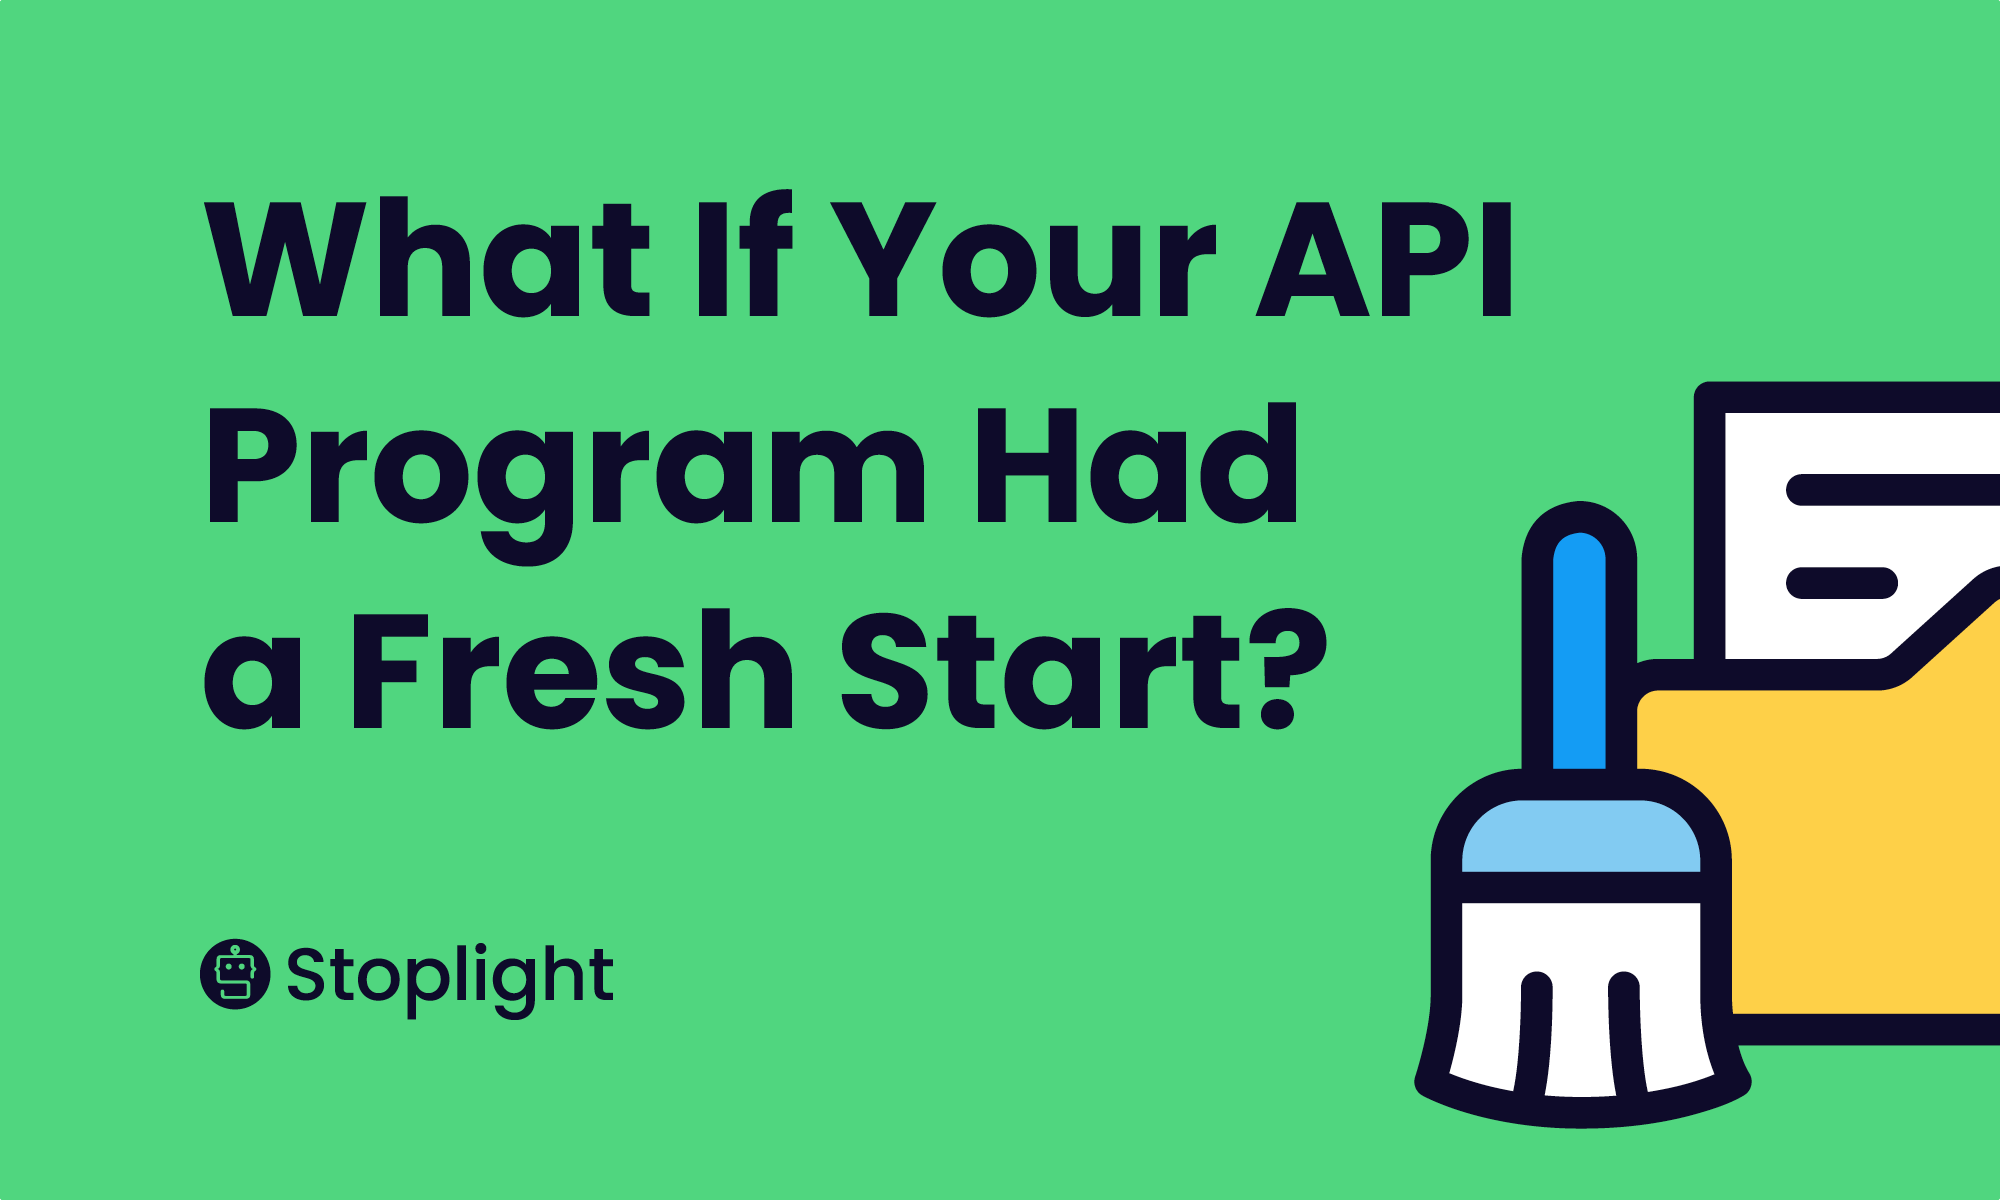 What If Your API Program Had a Fresh Start?